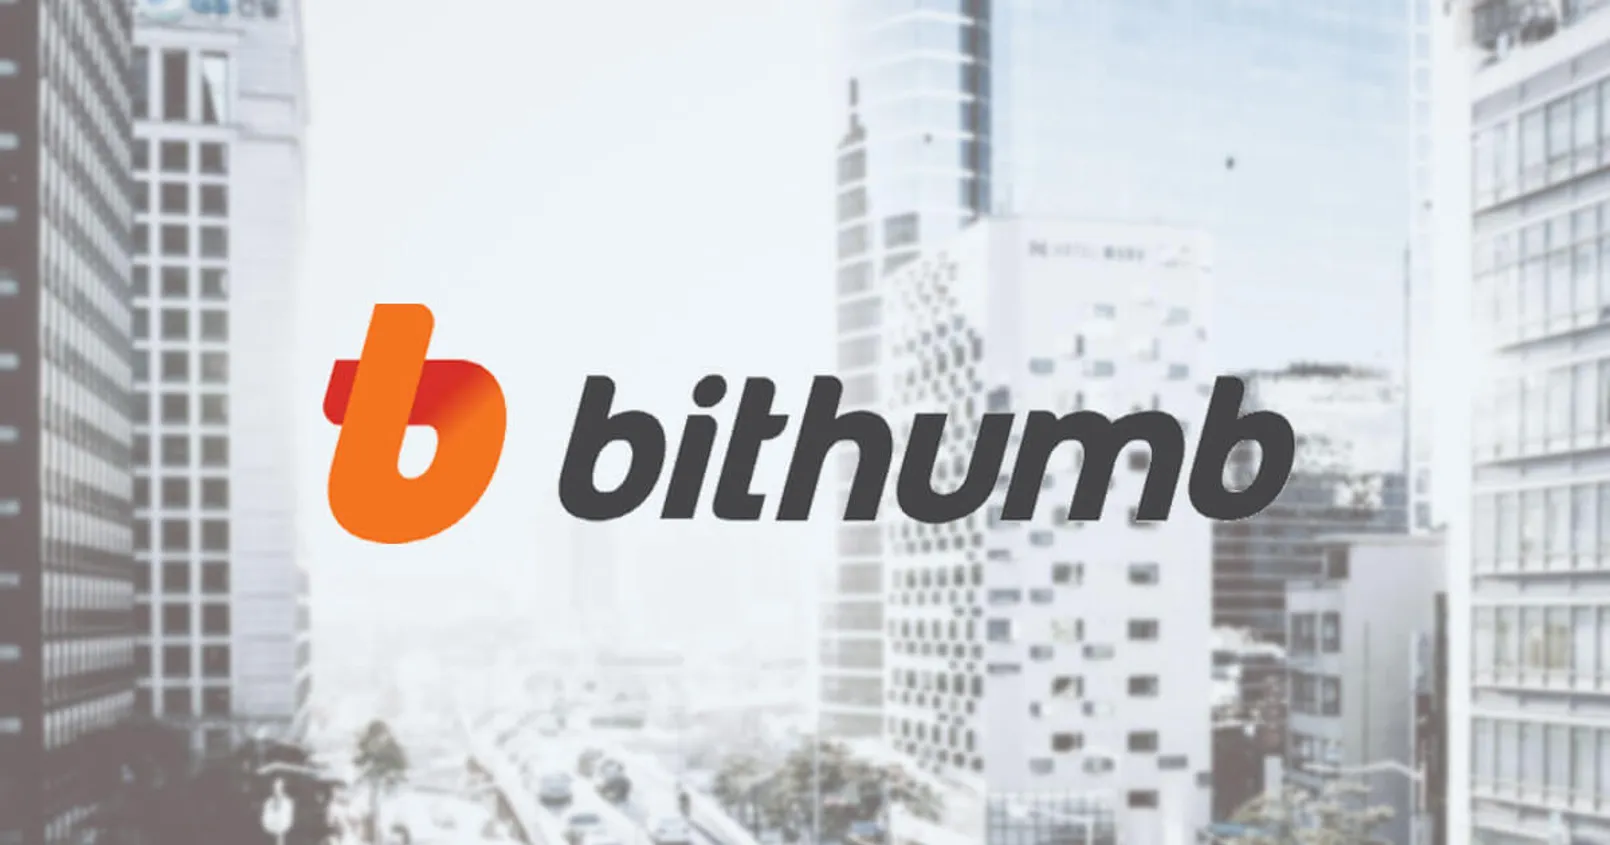 Bithumb Company Social.jpg